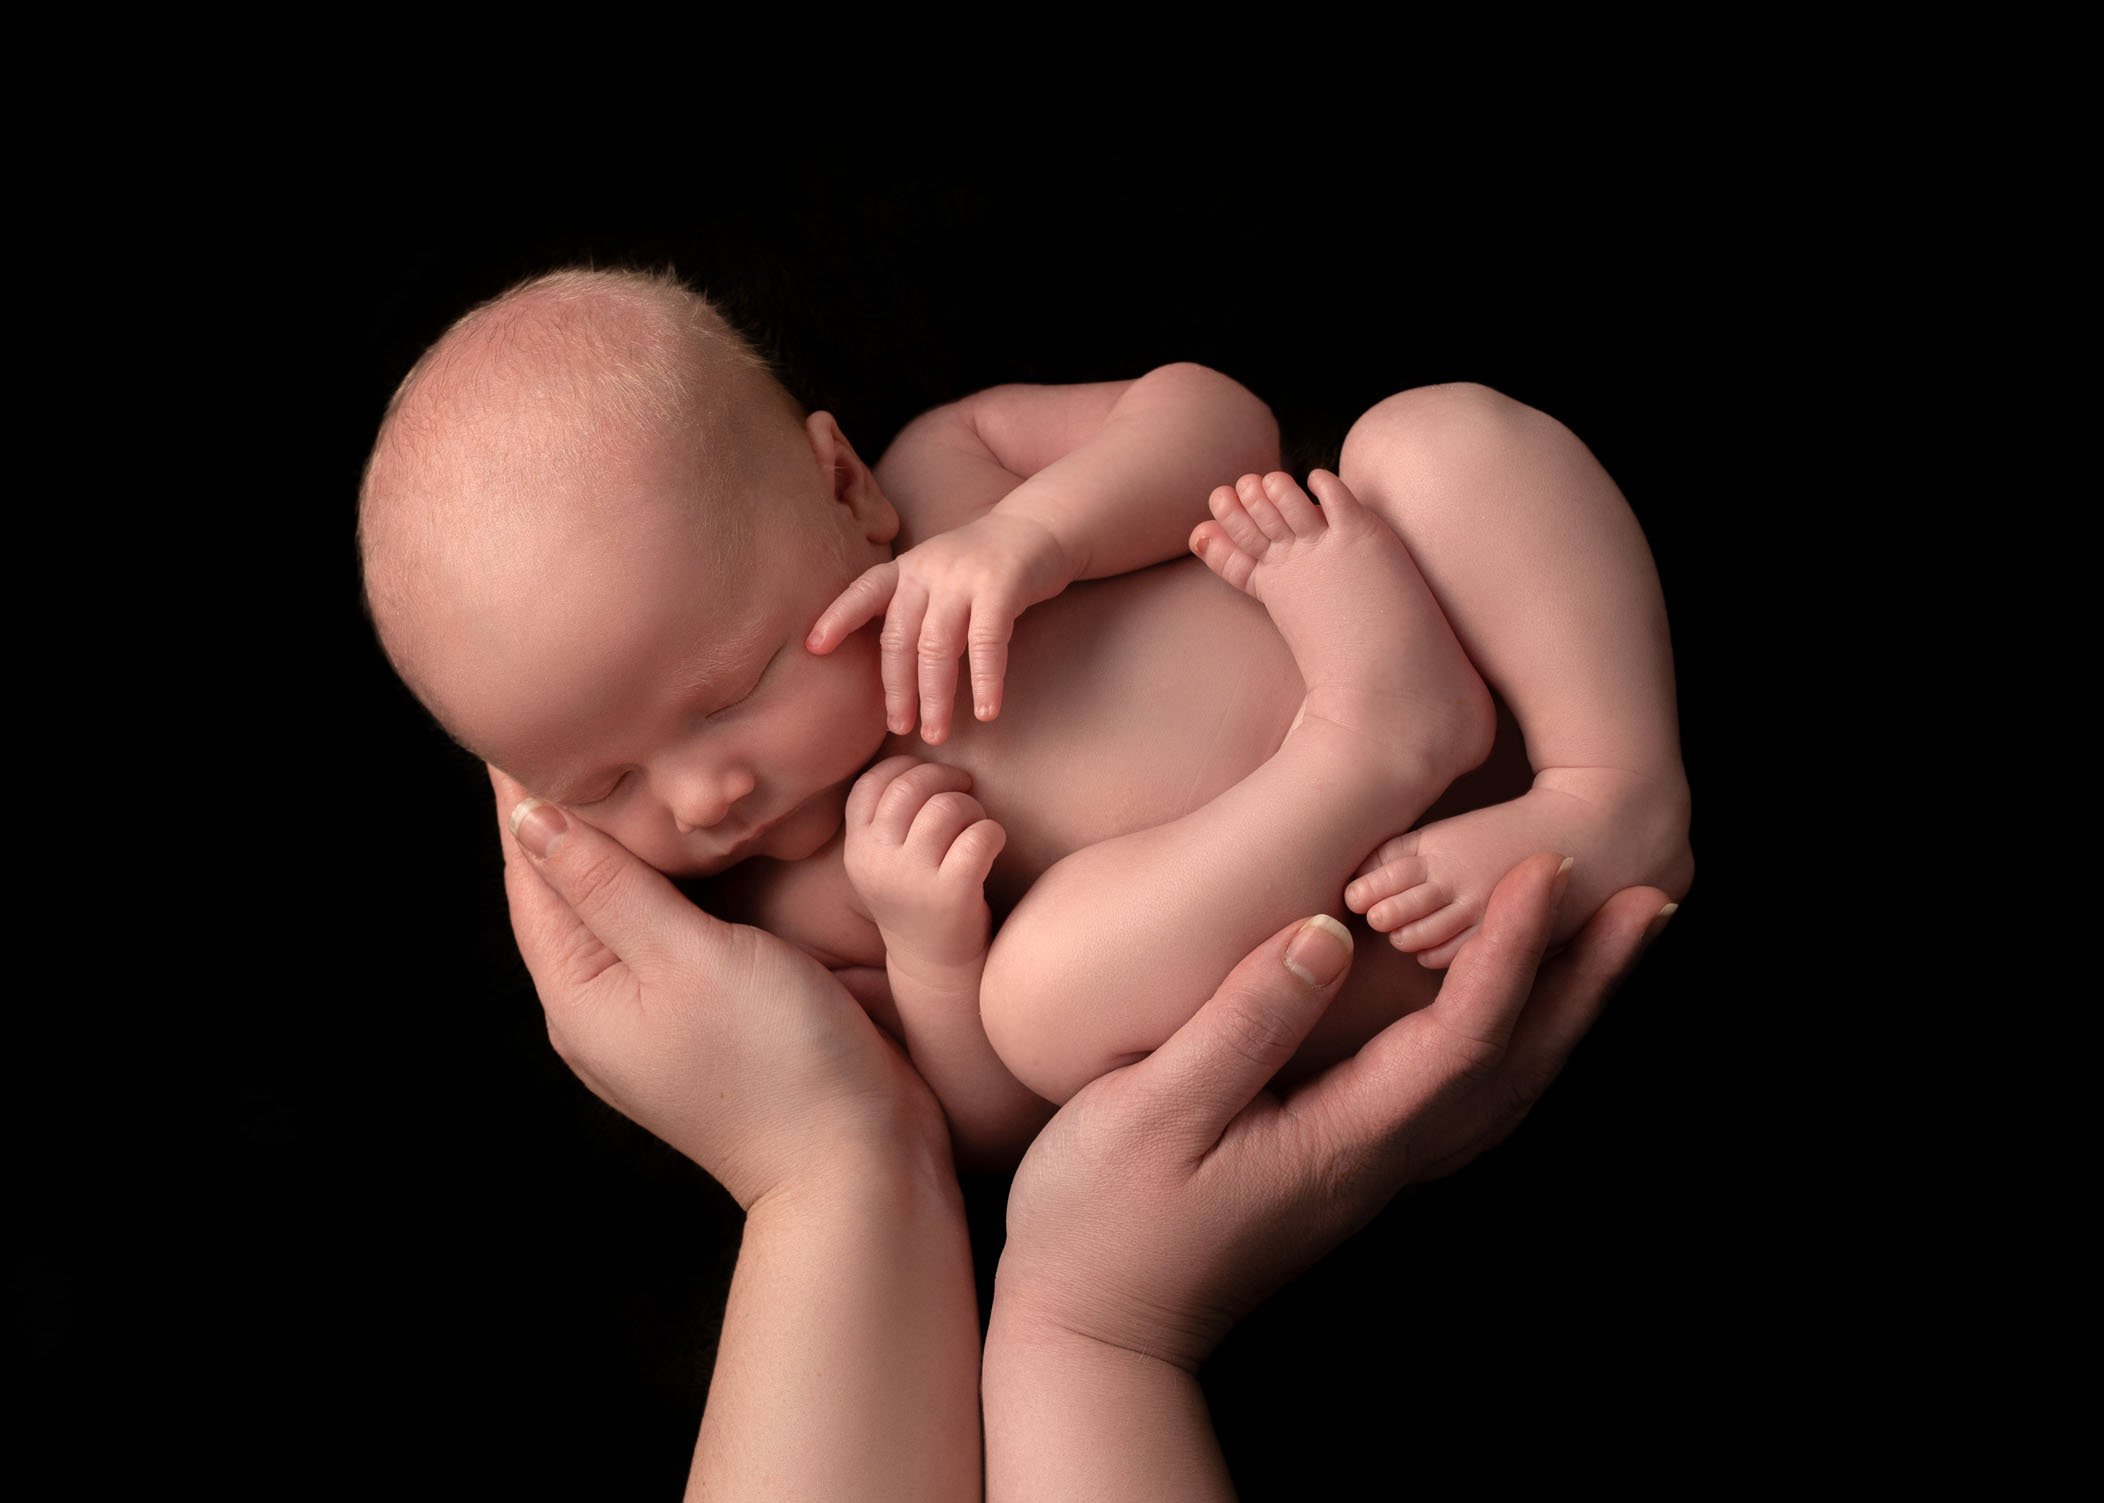 newborn boy sleeping in his mom's hands on black background